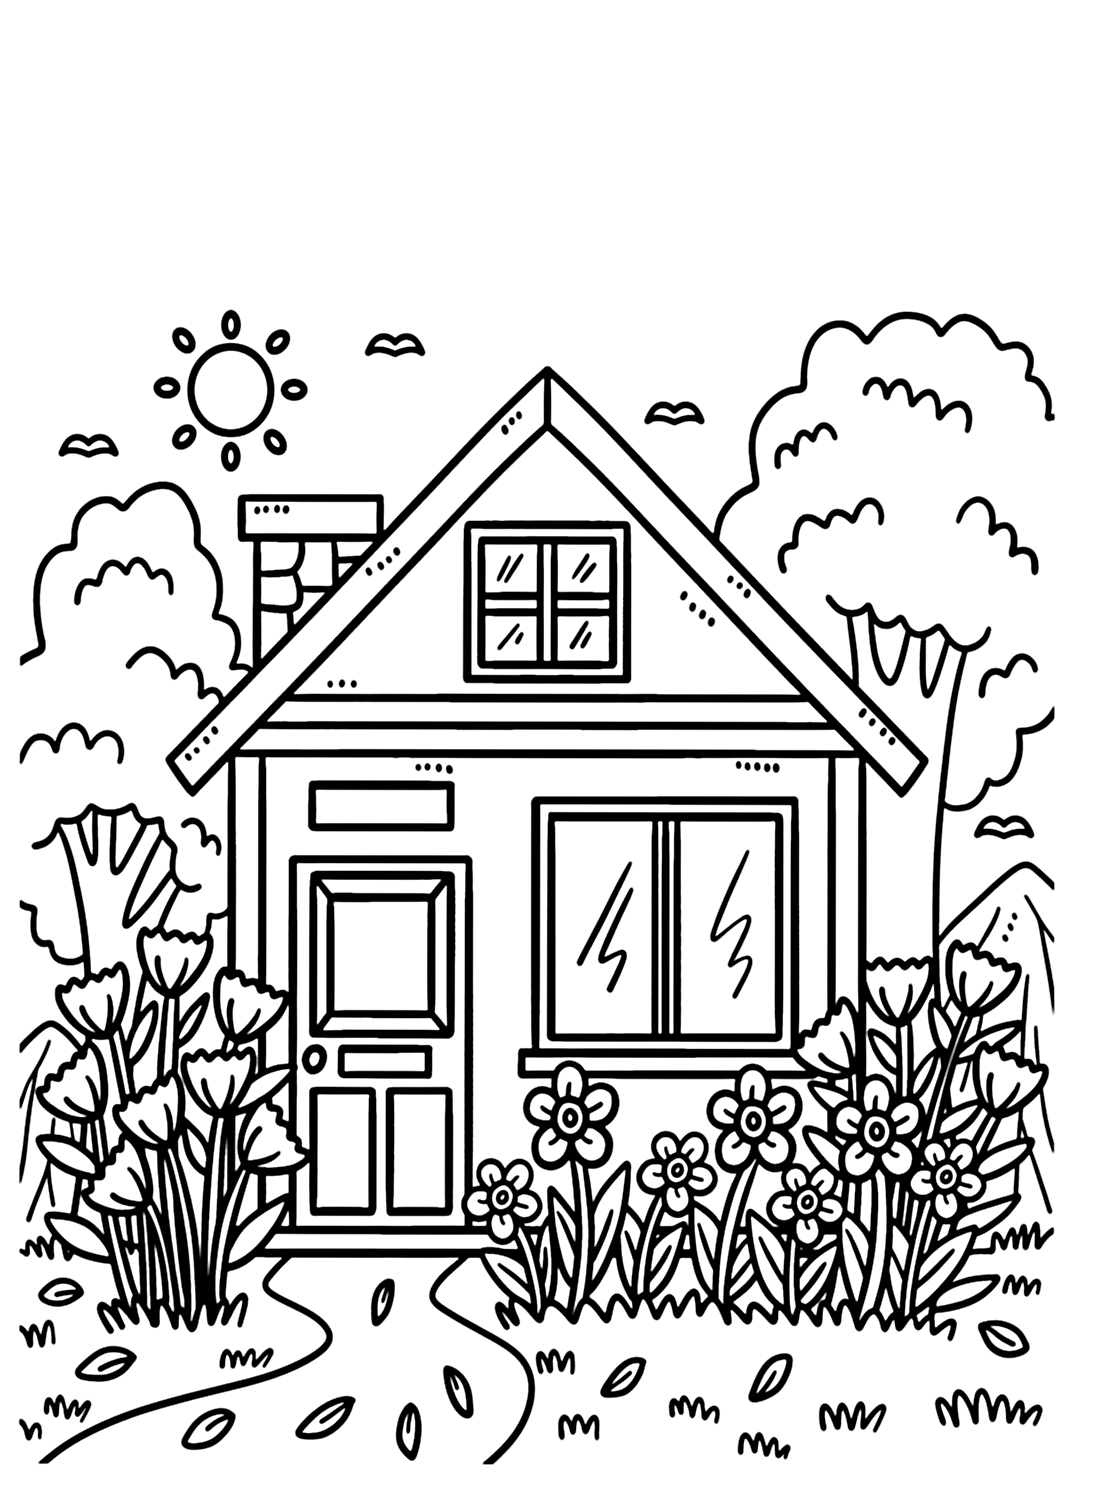 House and garden coloring sheet